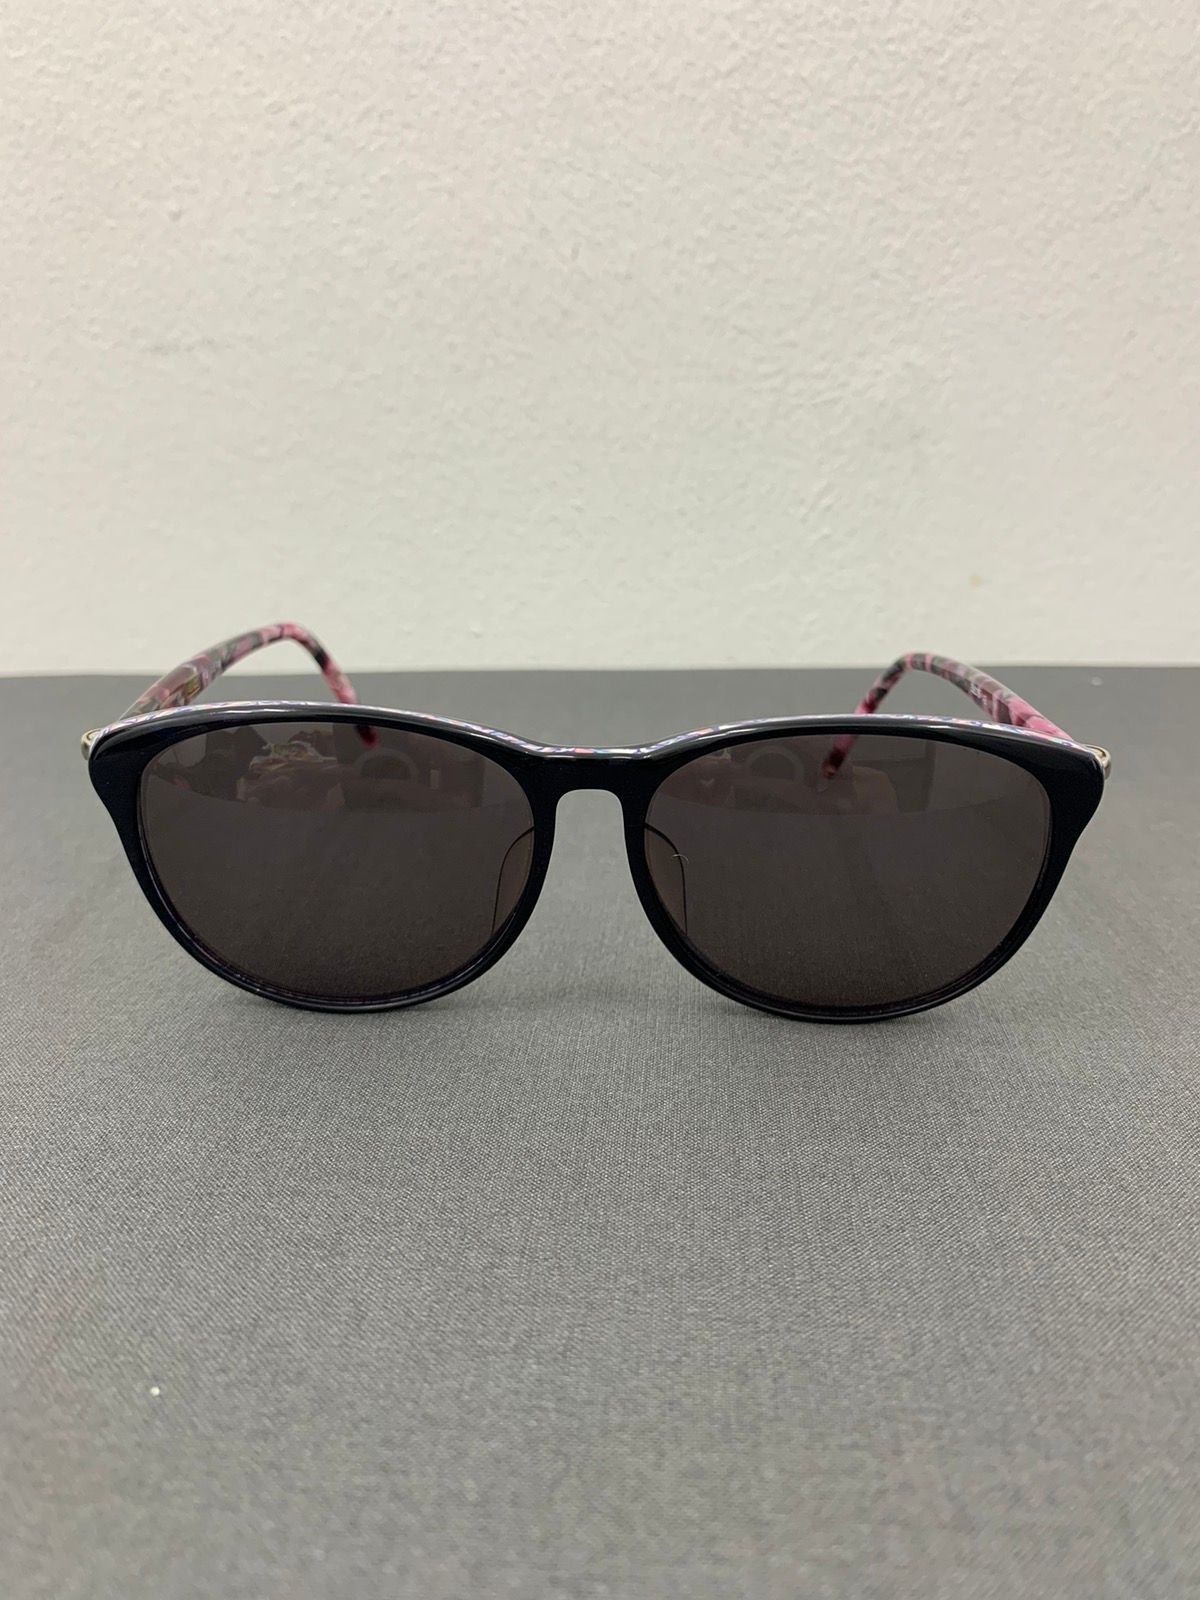 Vintage - Kenzo Sunglasses wayferer style - 1